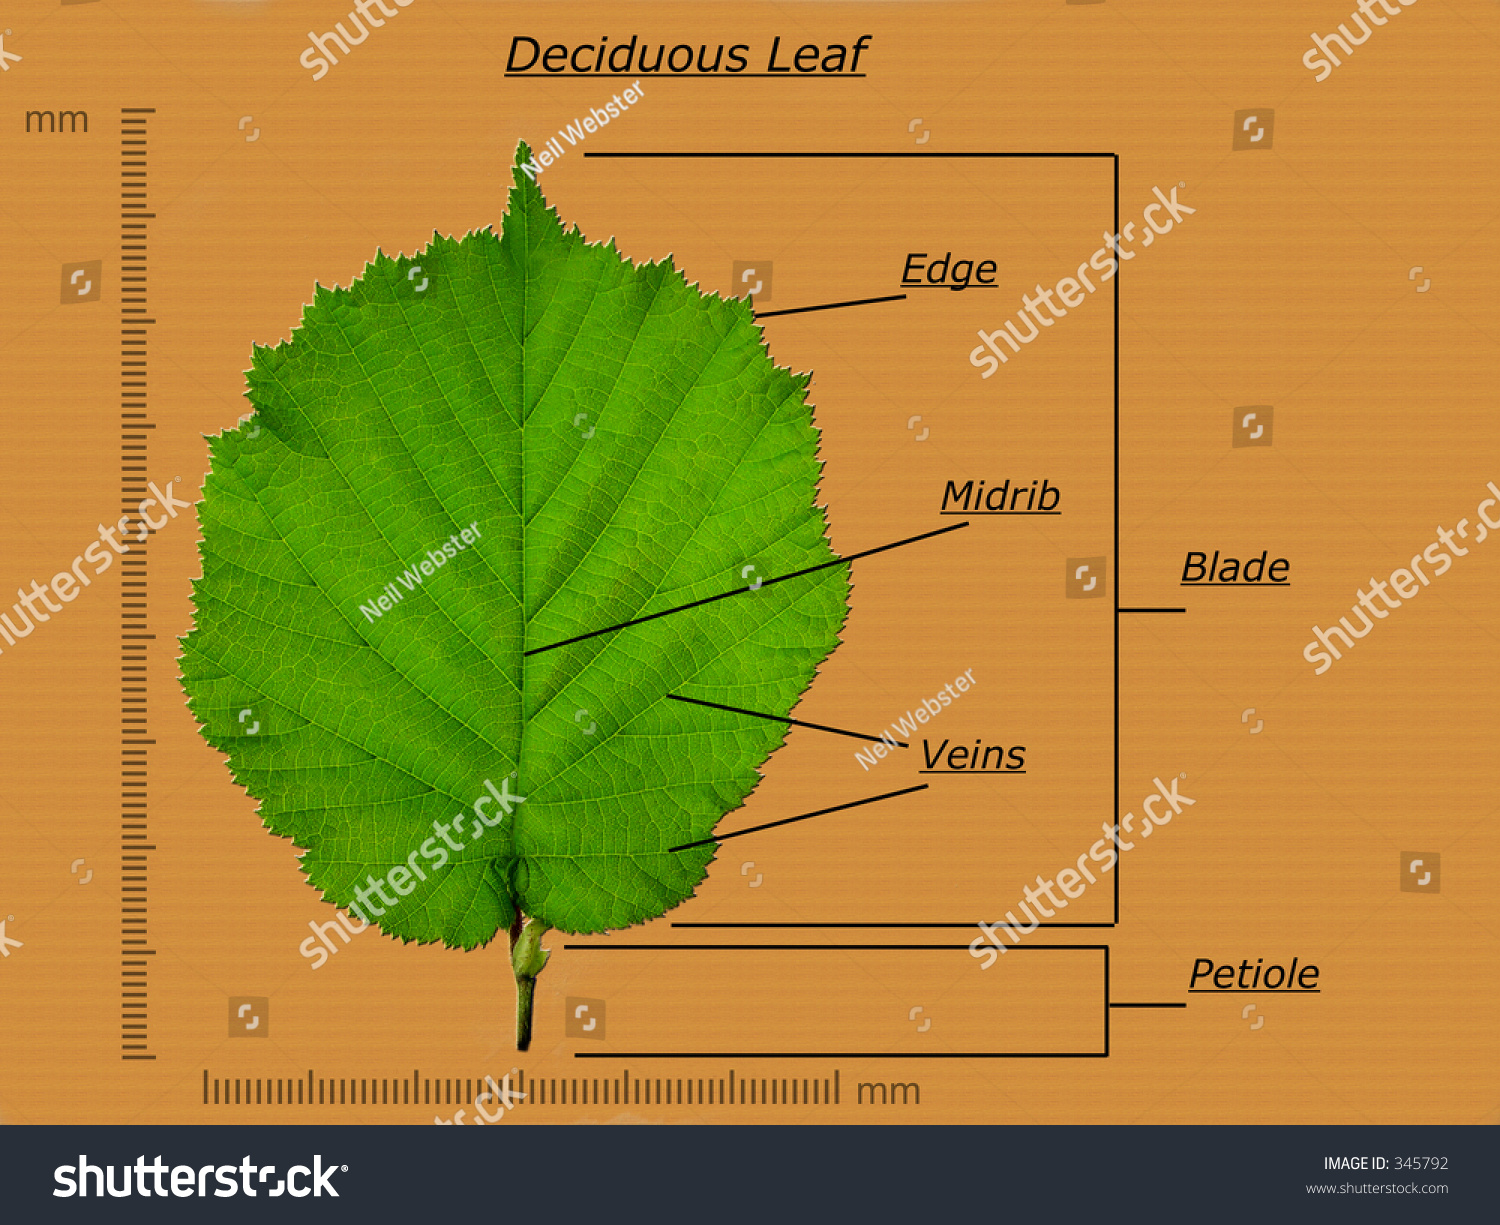 Leaf Diagram Stock Photo 345792